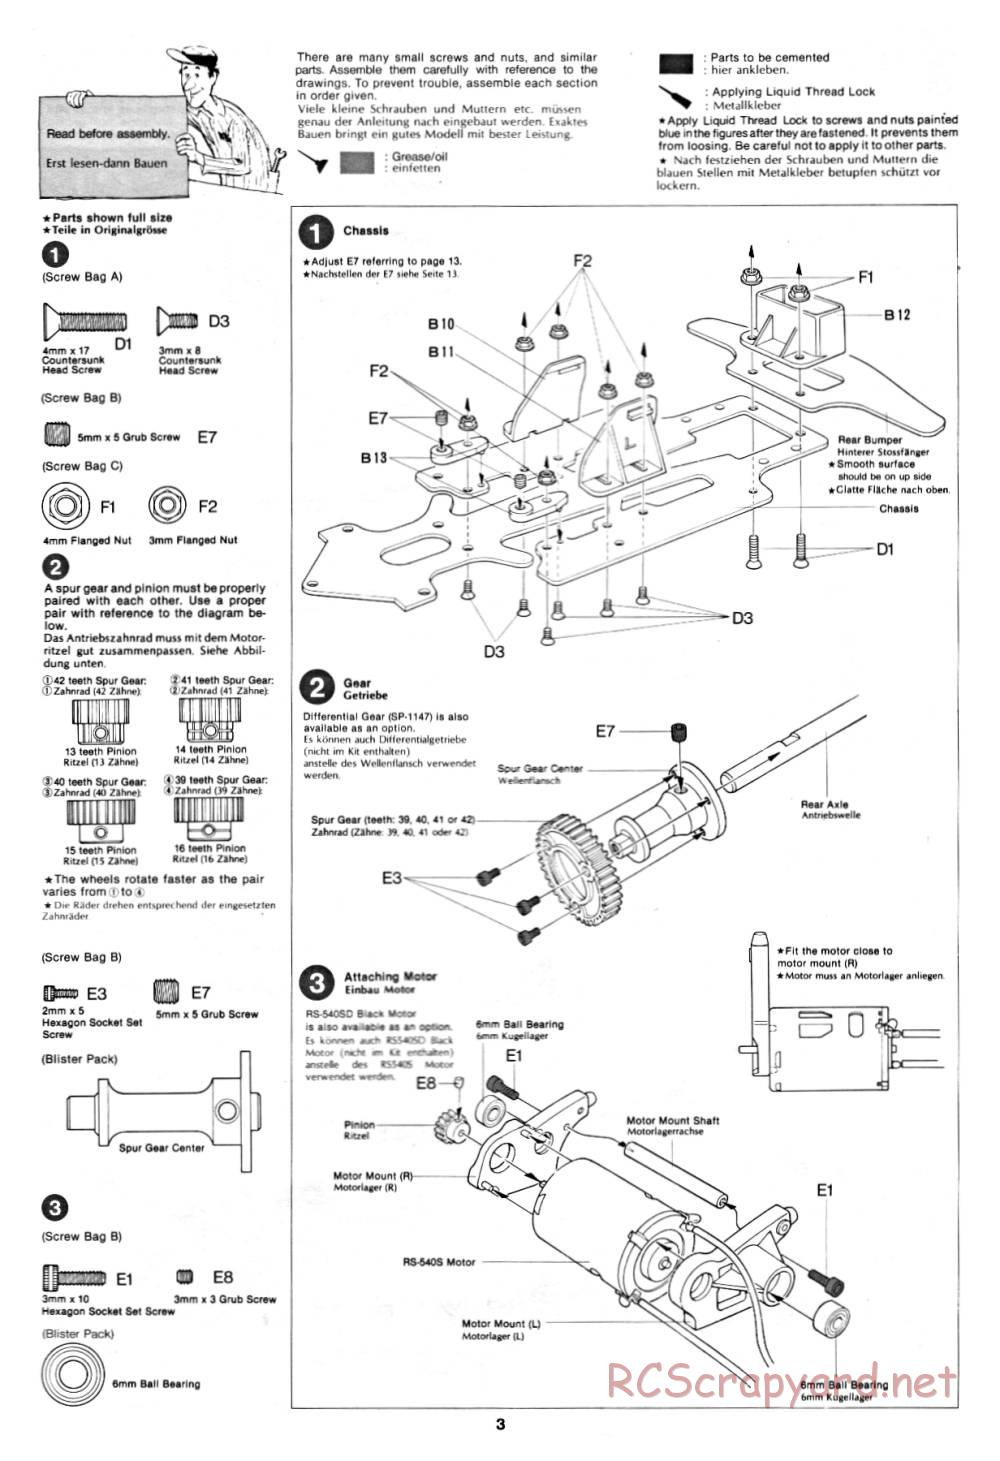 Tamiya - Datsun 280ZX - 58022 - Manual - Page 3